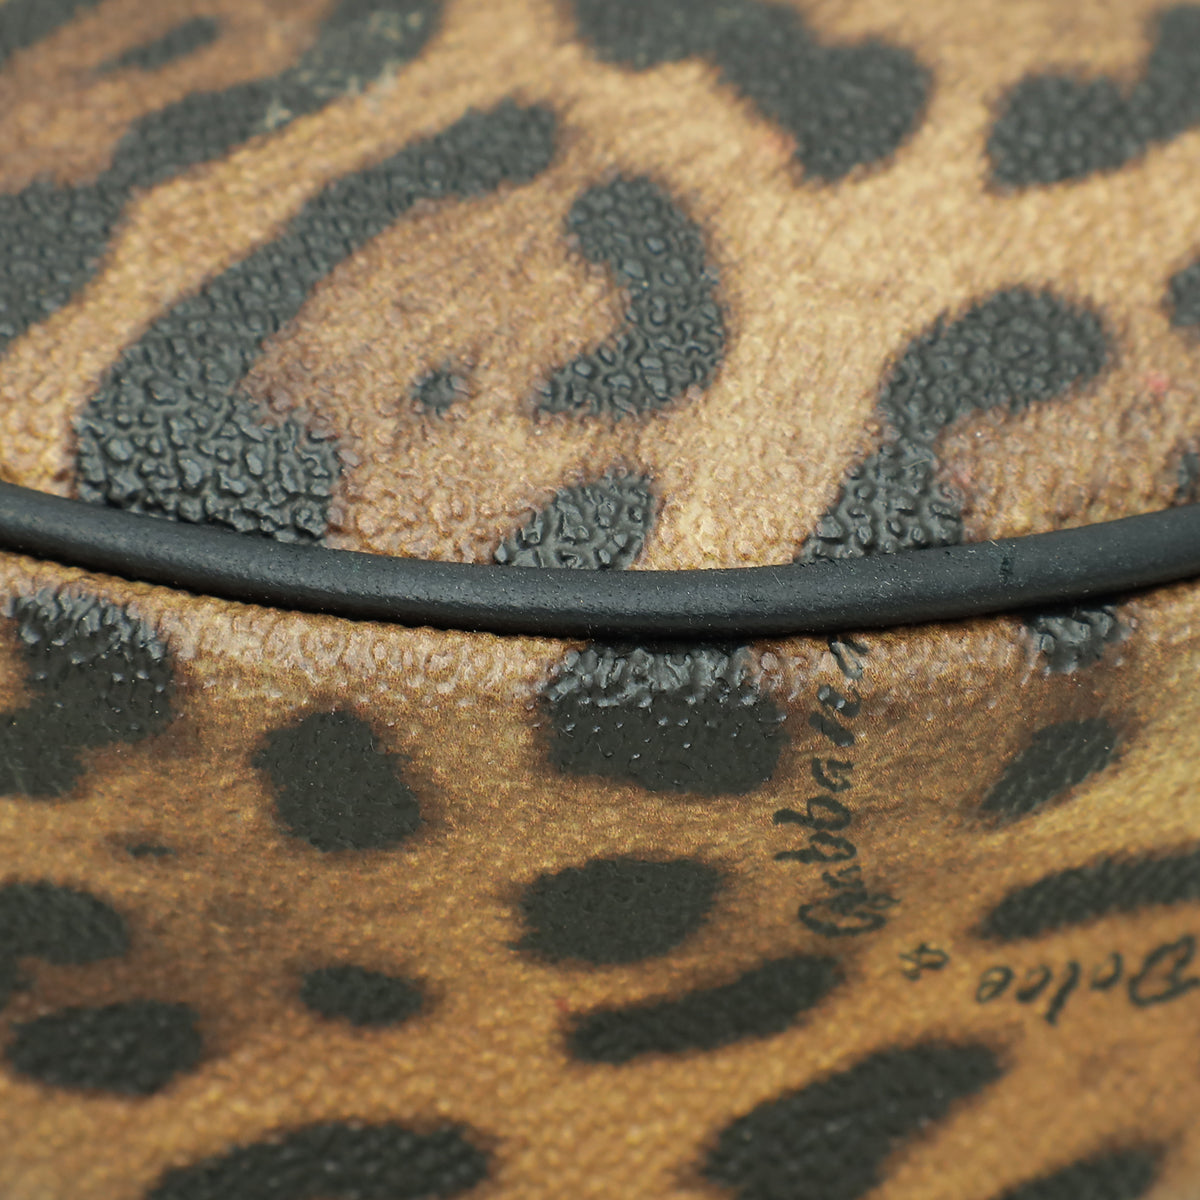 Dolce & Gabbana Bicolor Leopard Print Glam Round Crossbody Bag